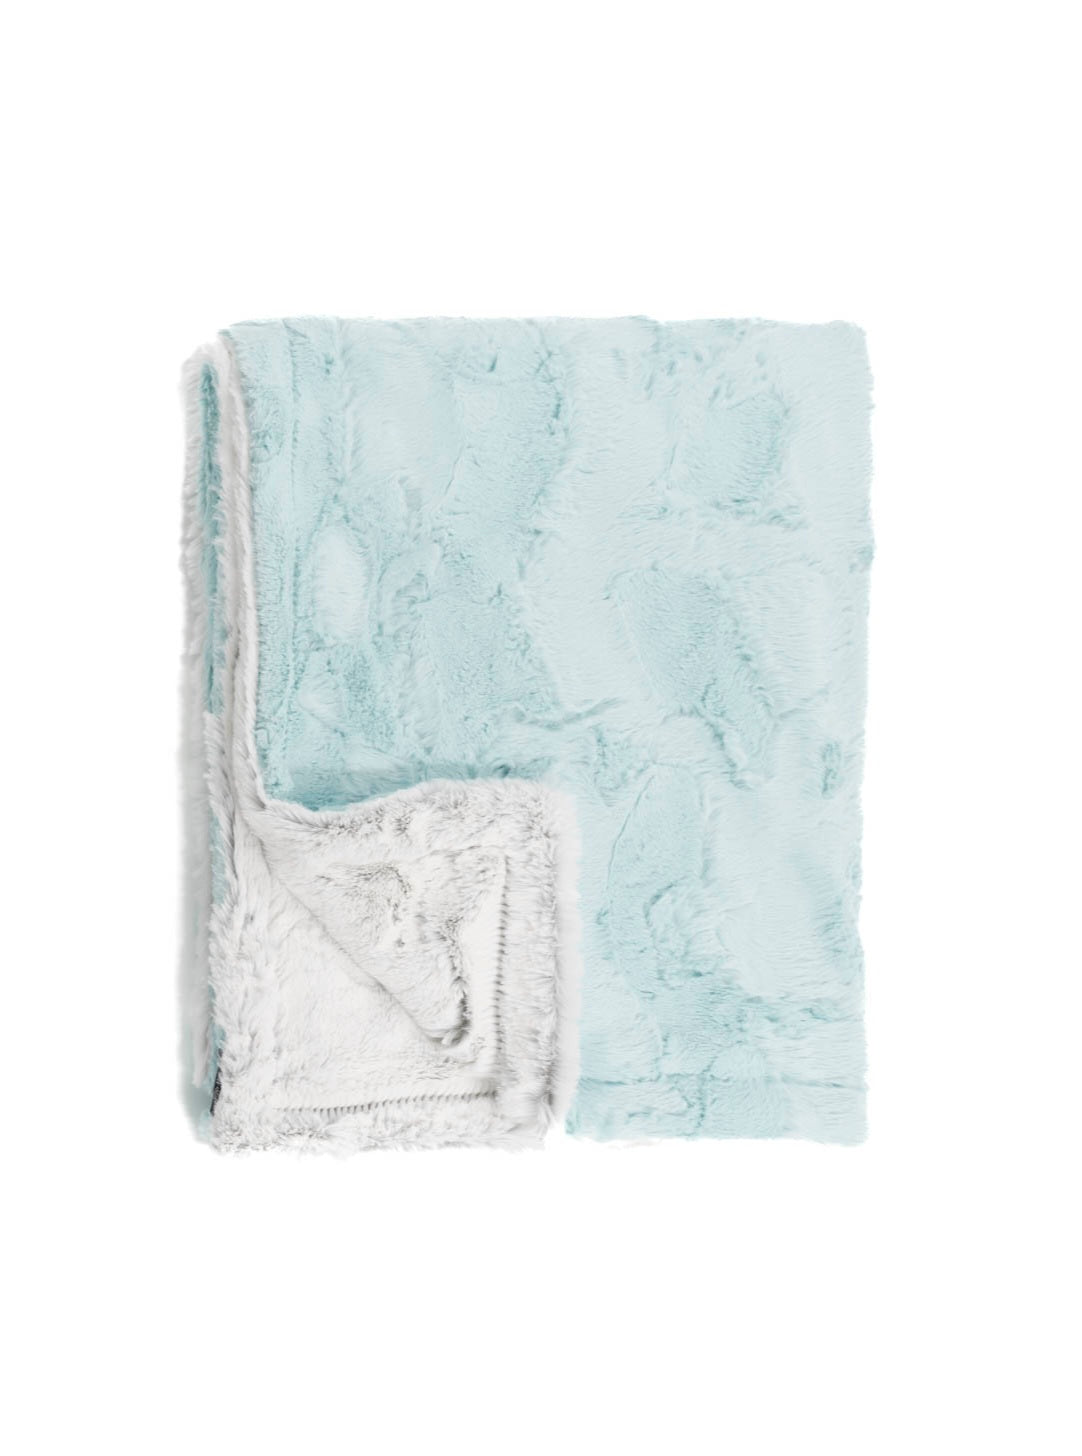 Aqua Frost Minky Blanket